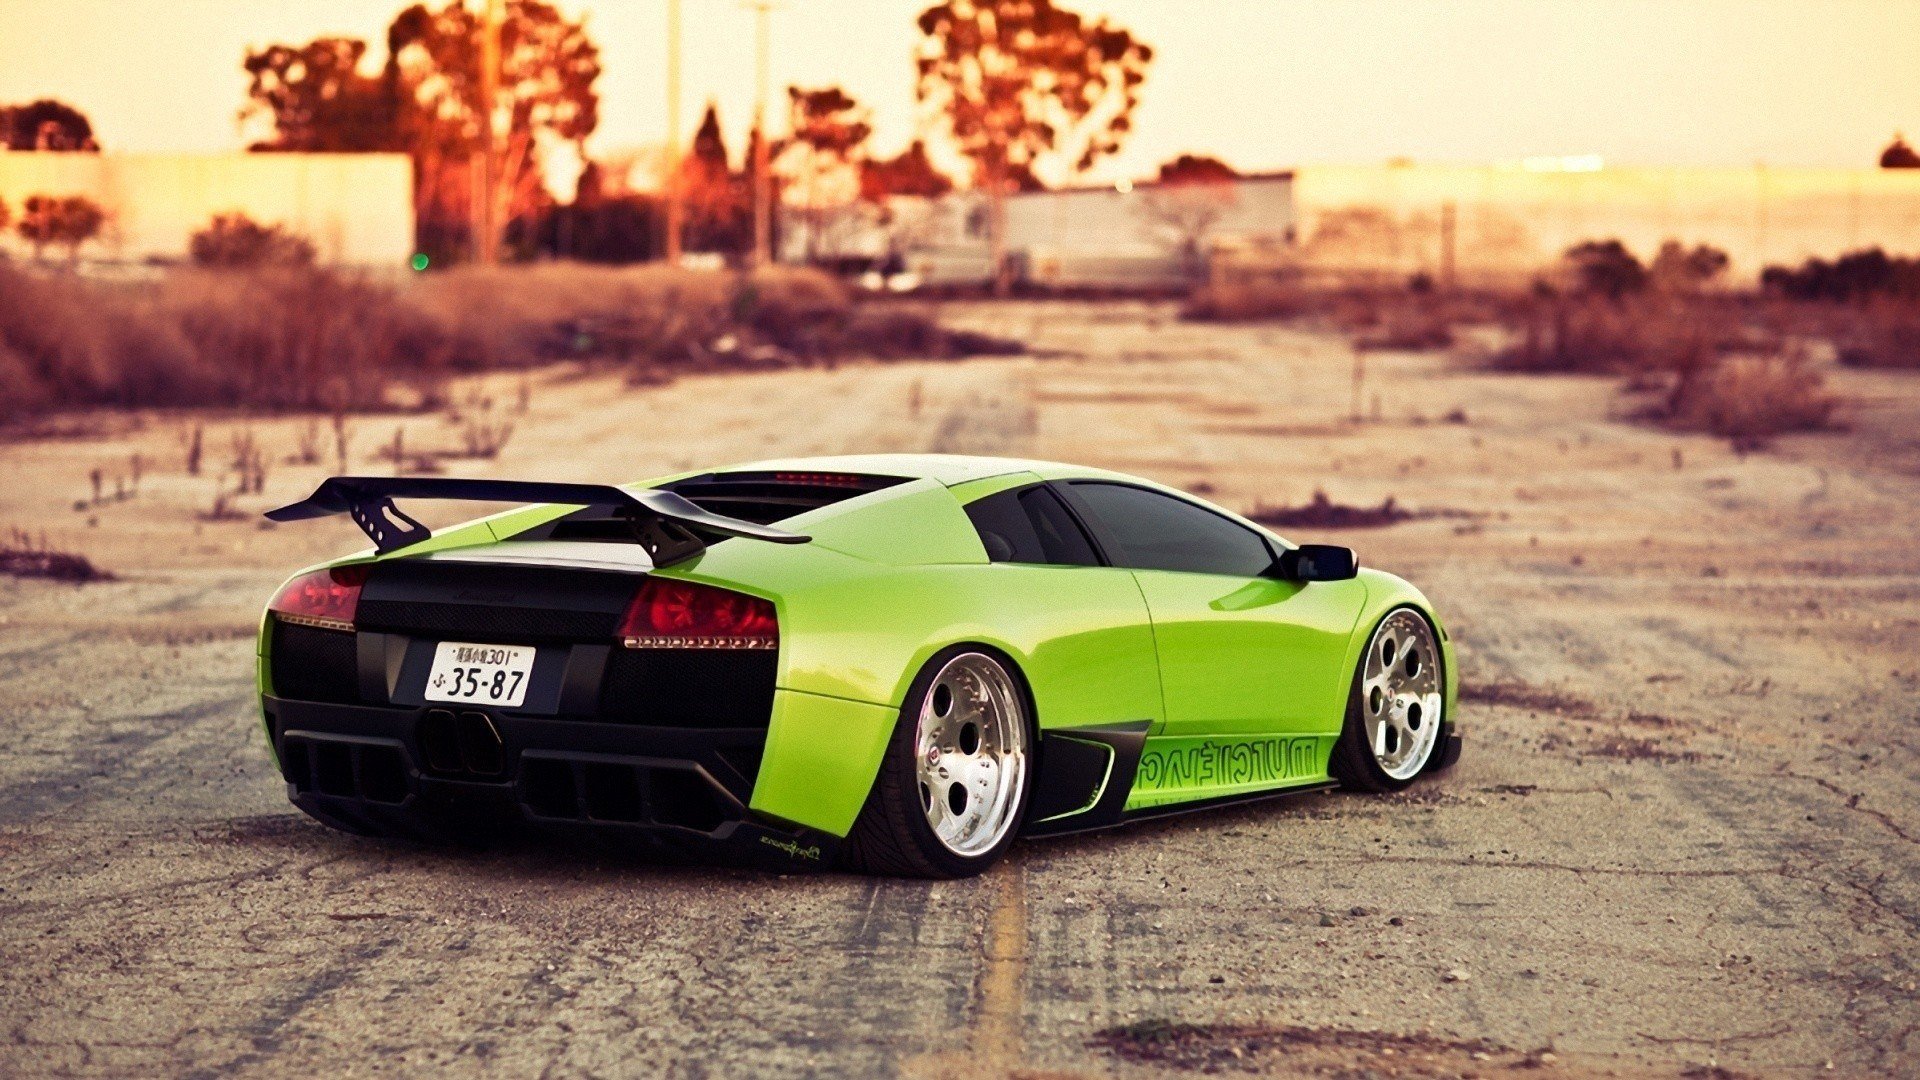 Awesome Lamborghini Murcielago free background ID:155292 for full hd 1920x1080 desktop